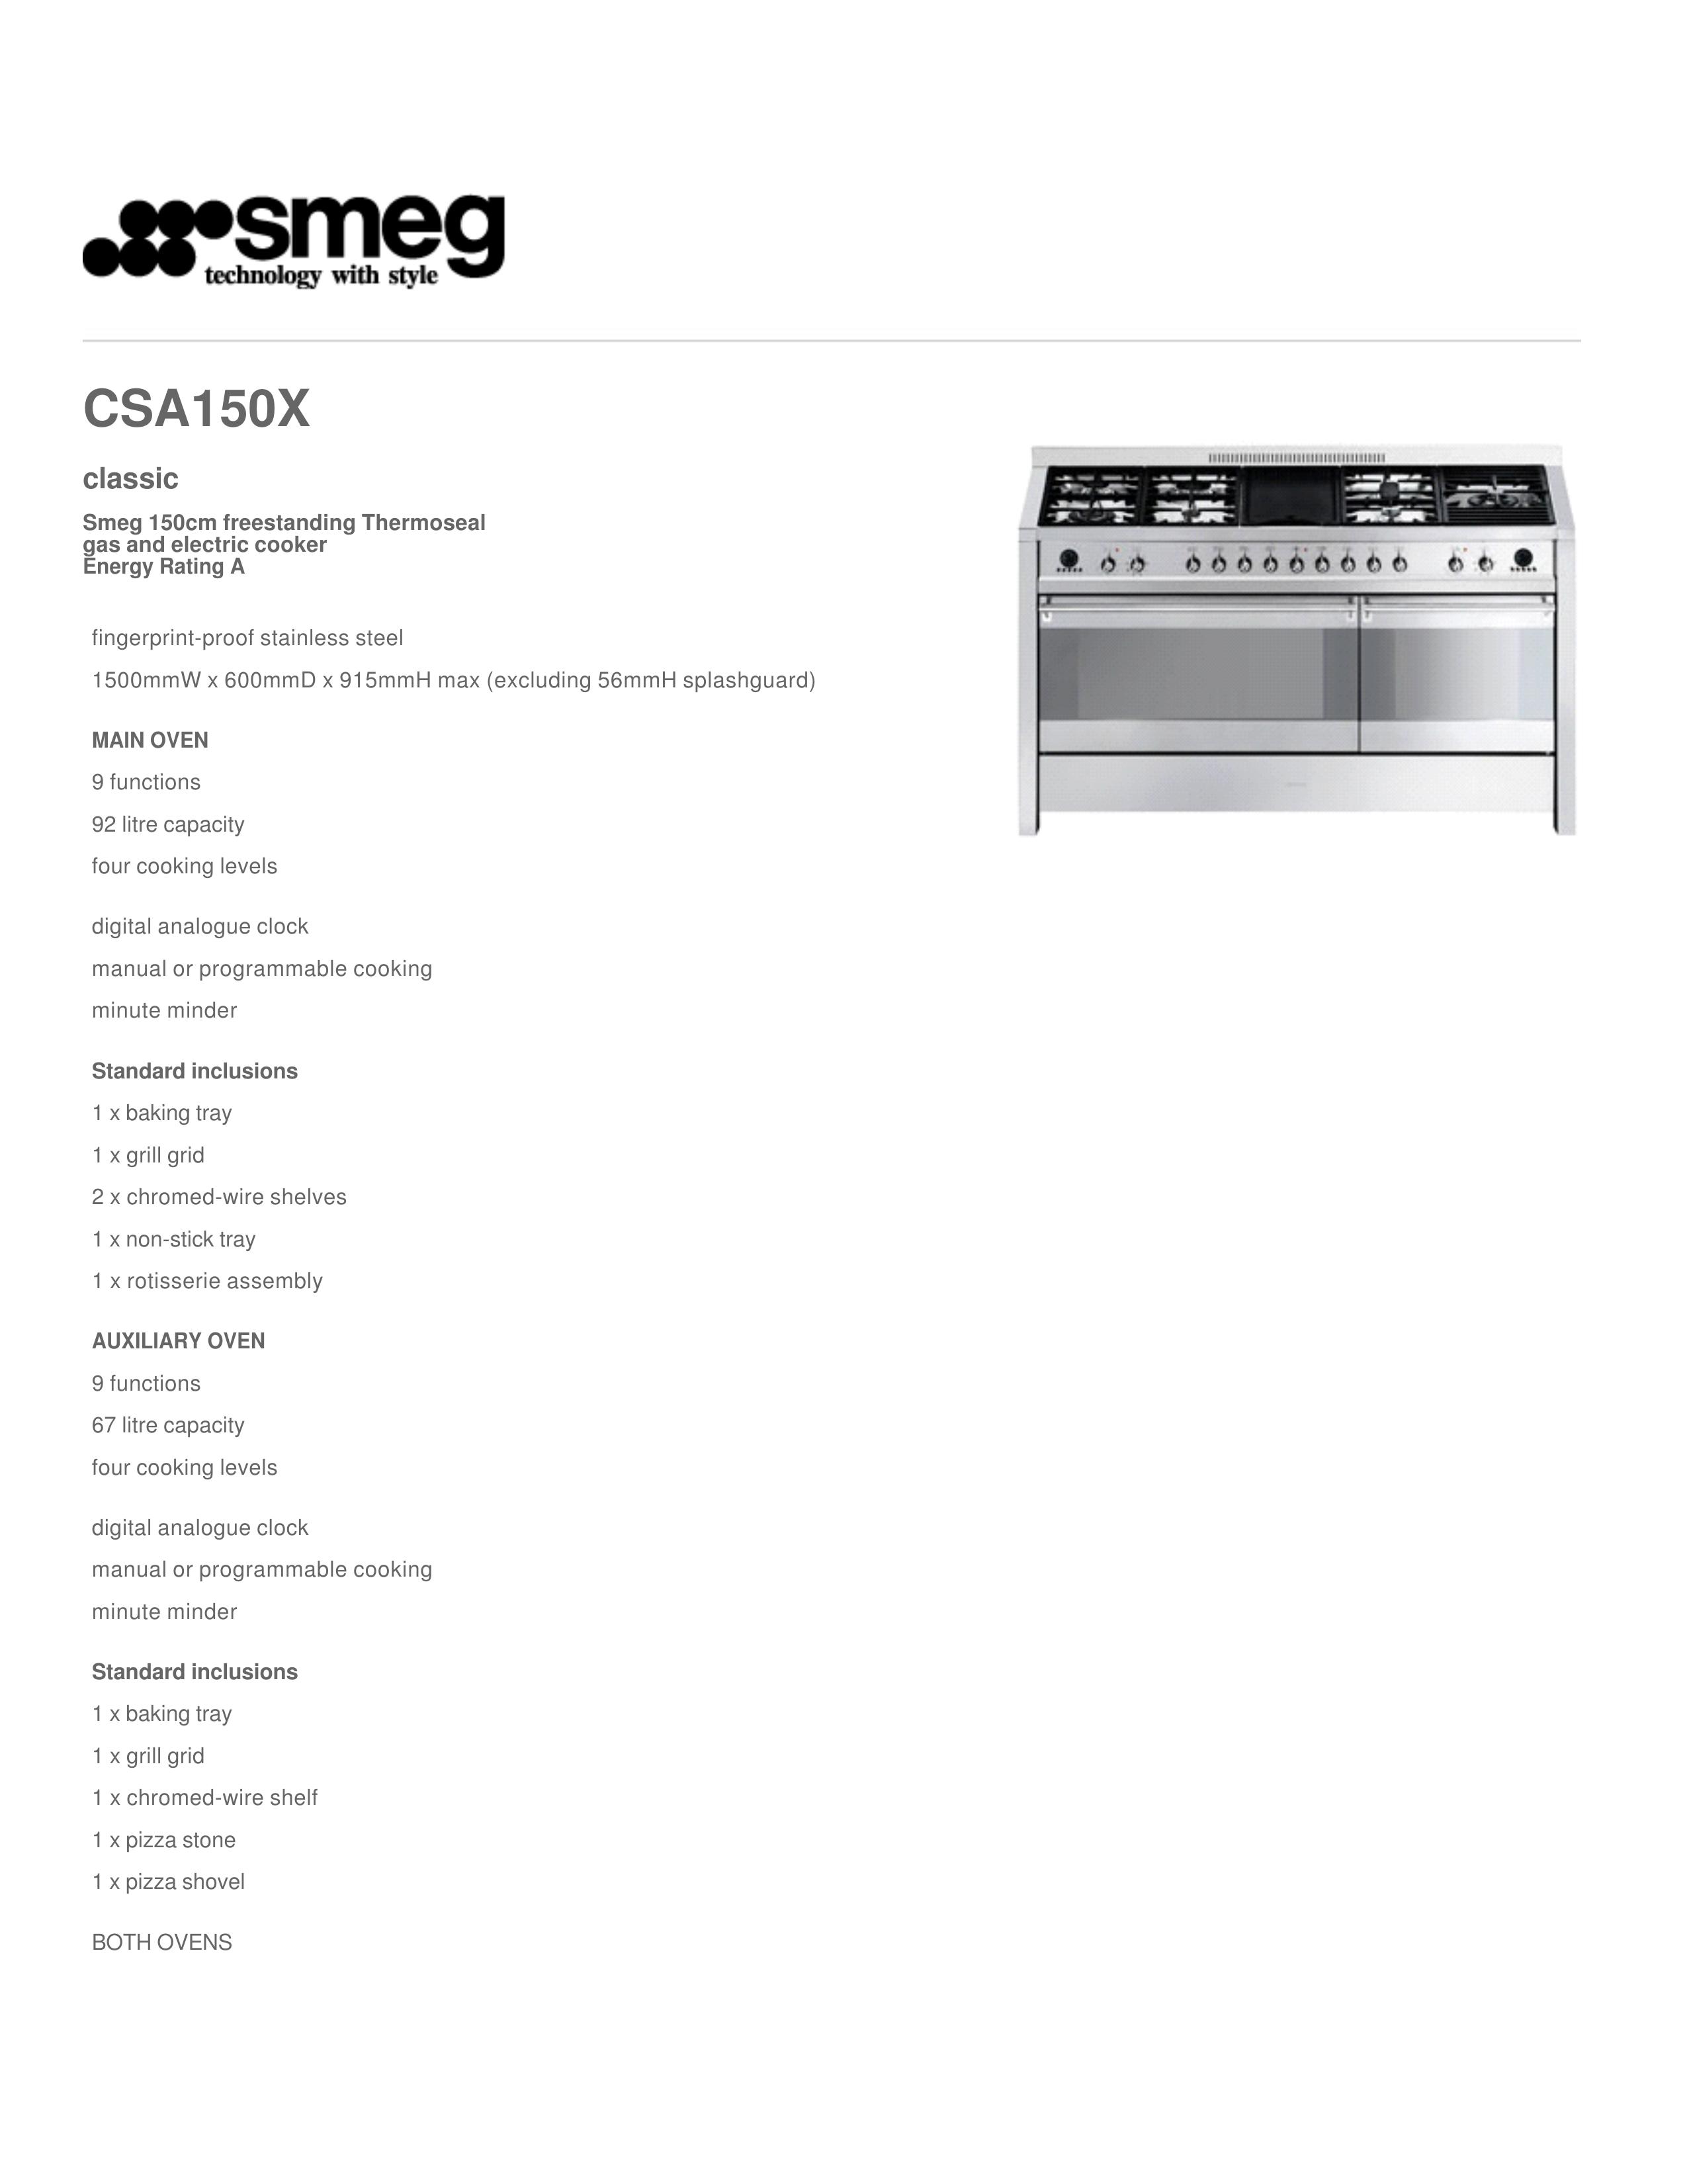 Smeg CSA150X Electric Grill User Manual